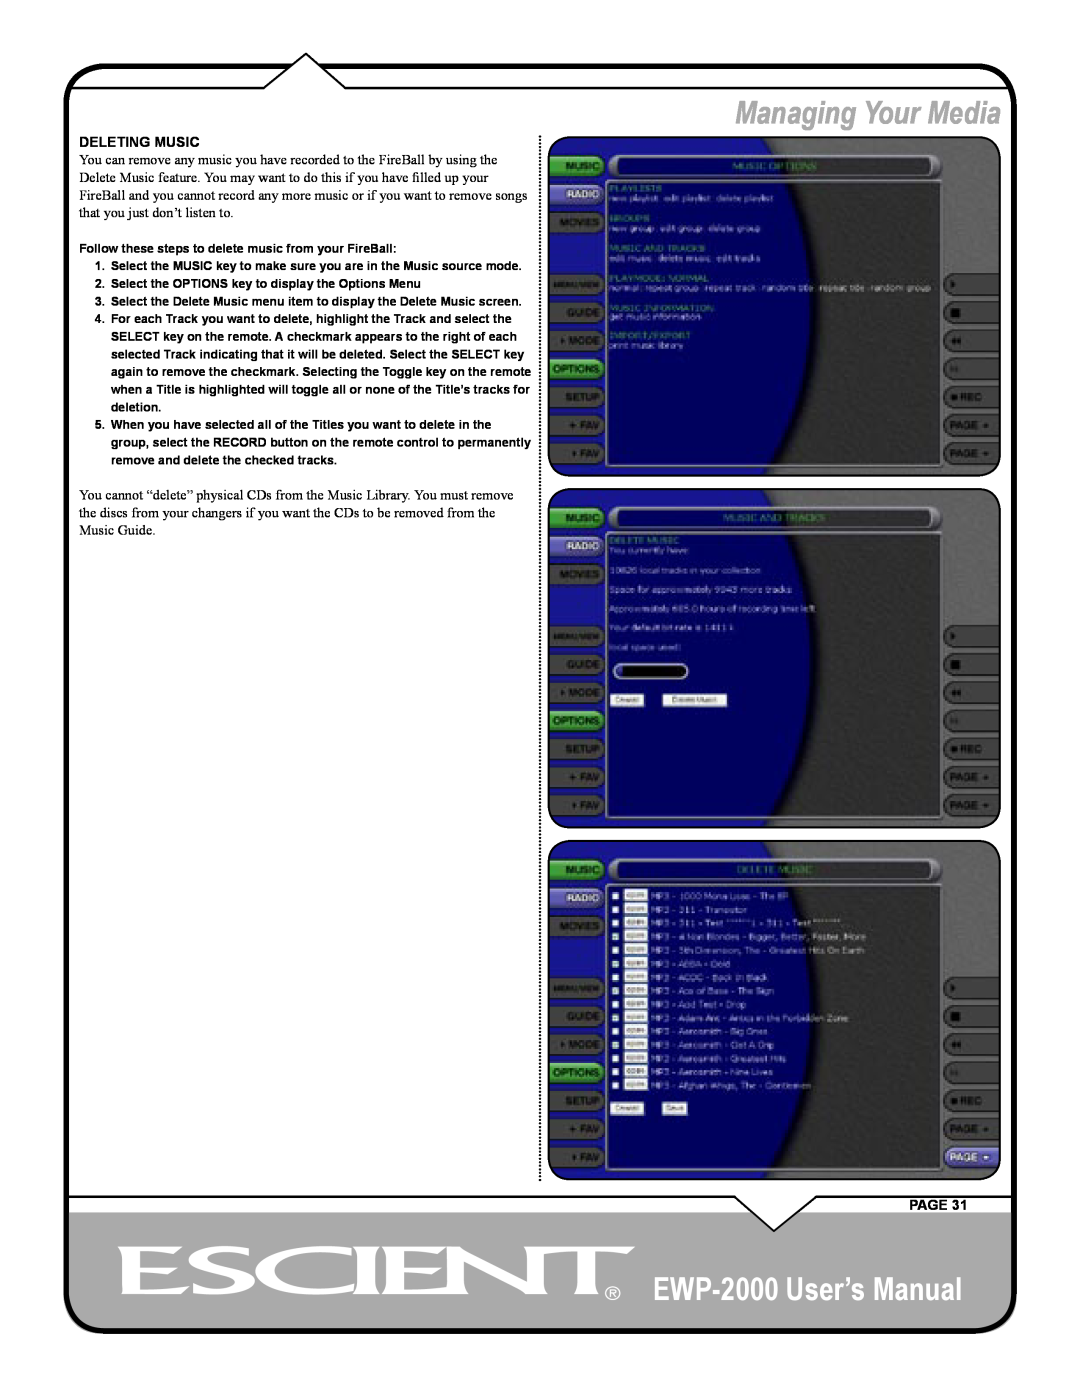 Escient user manual Managing Your Media, EWP-2000 User’s Manual, Deleting Music, Page 